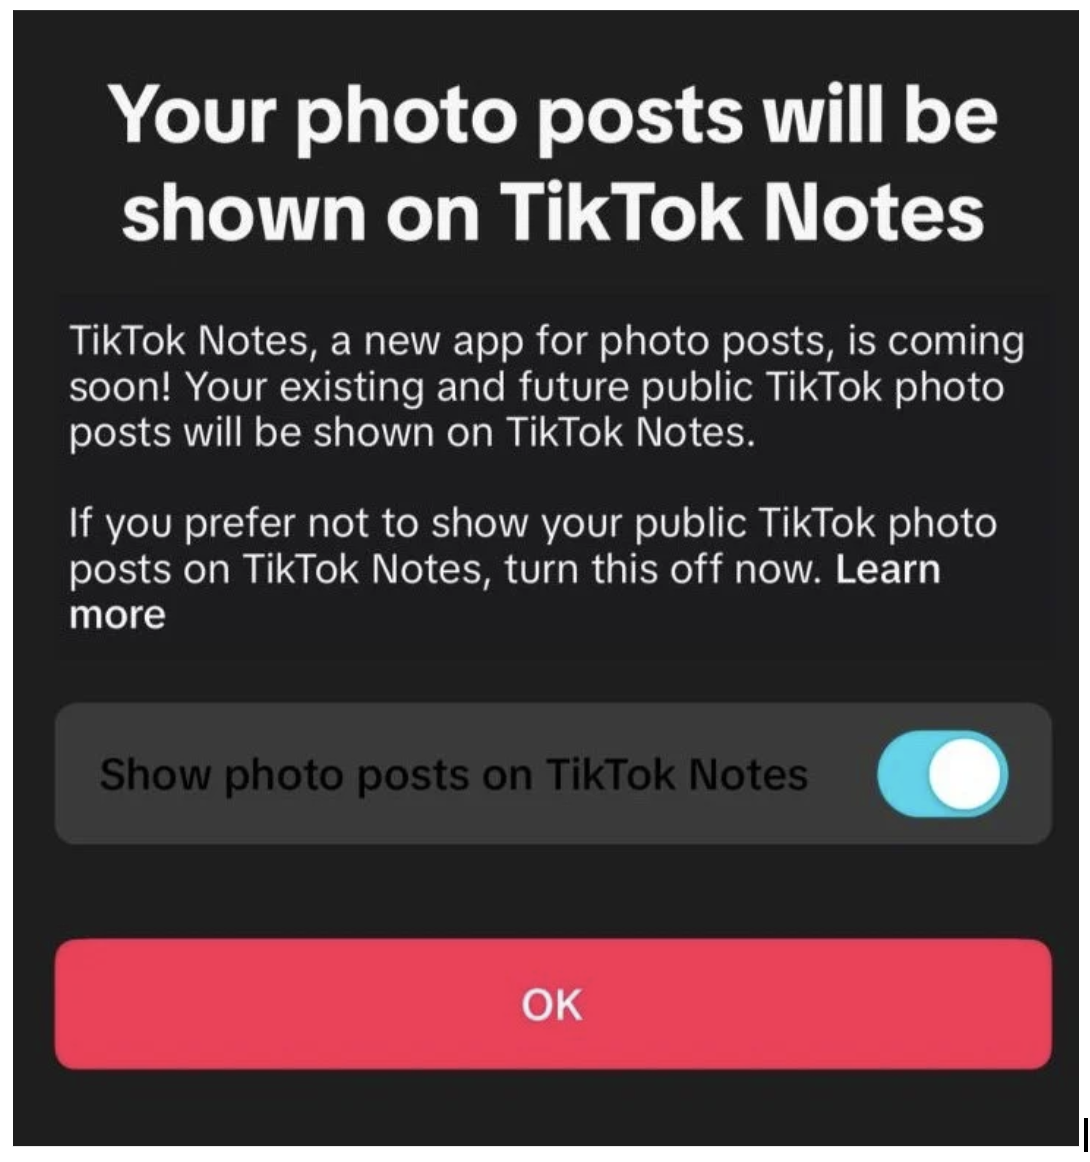 TikTok Notes photo upload